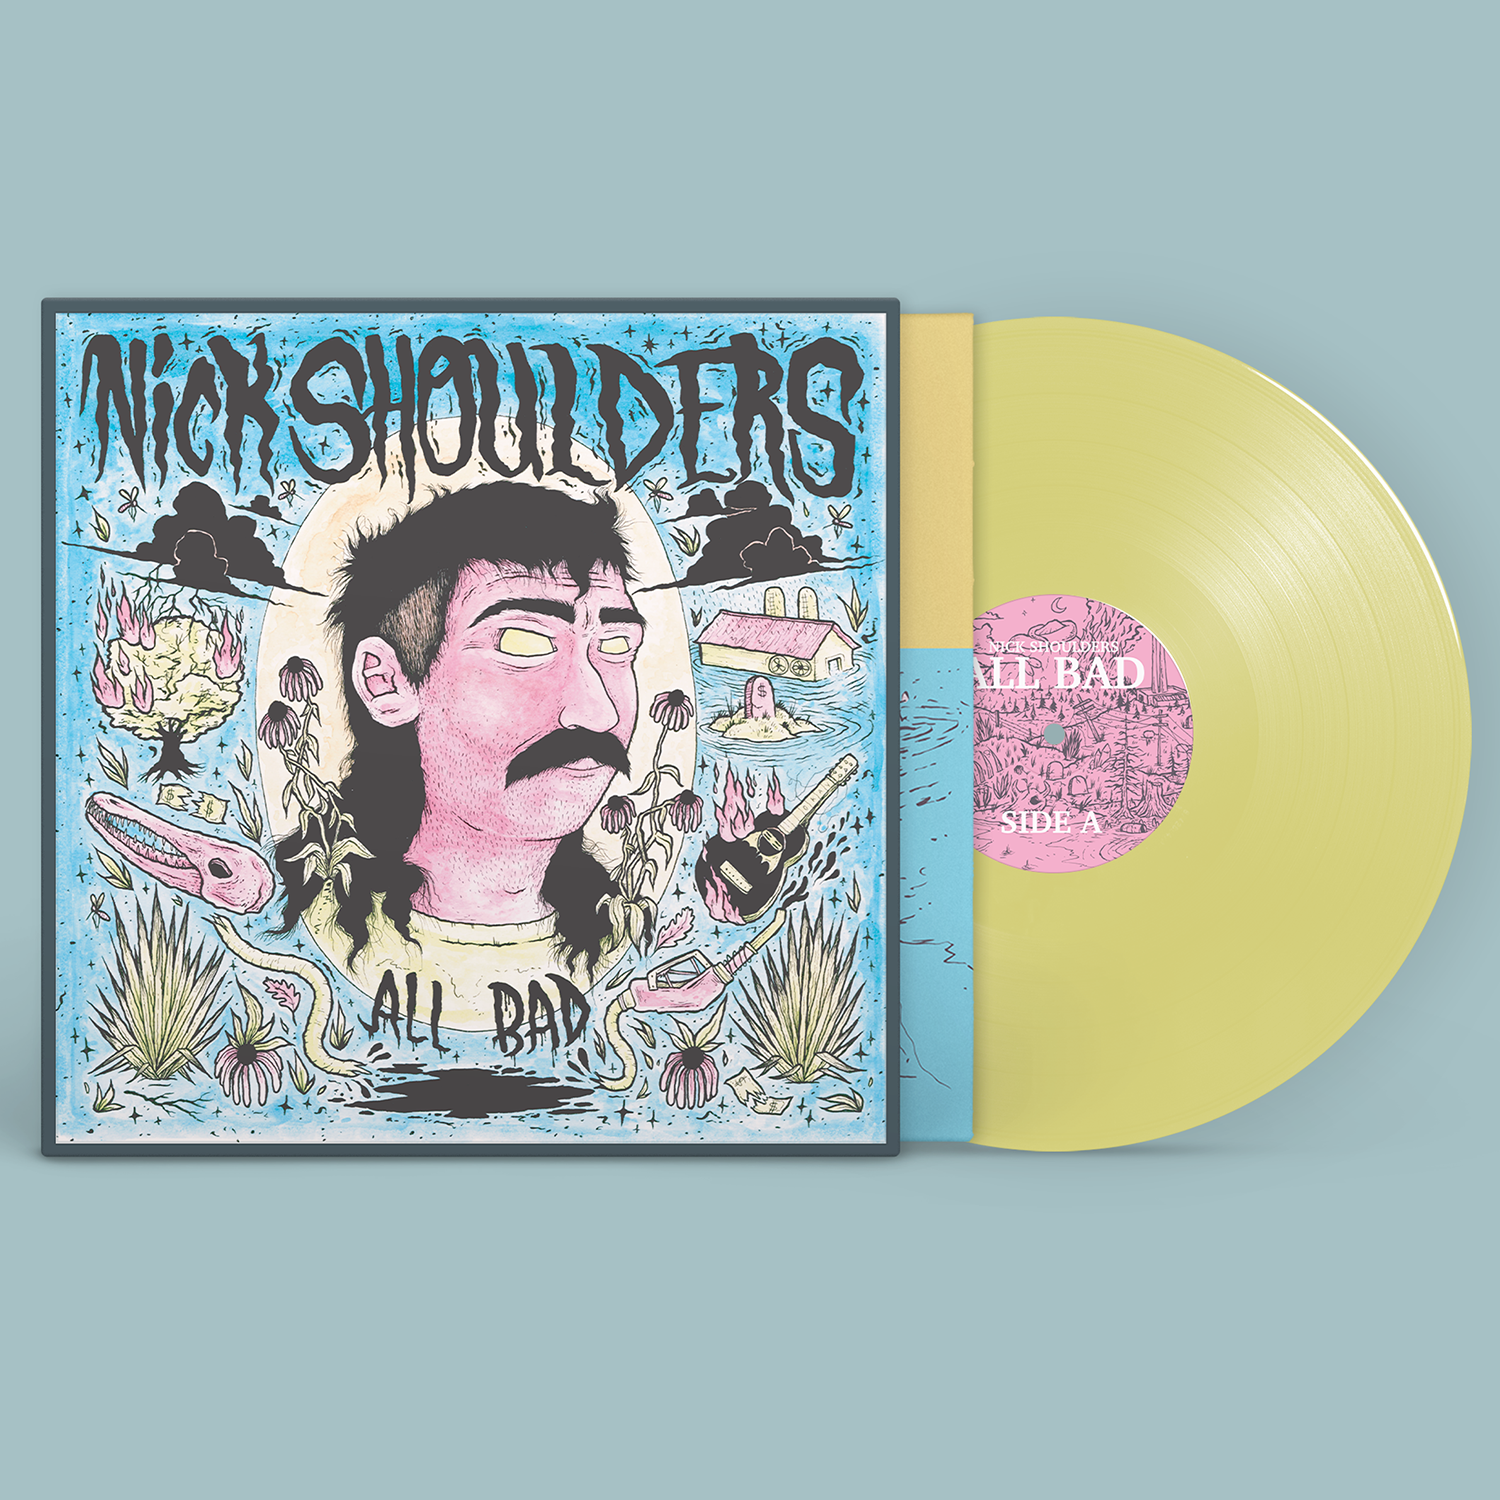 Nick Shoulders - "All Bad" 150g Transparent Yellow Vinyl